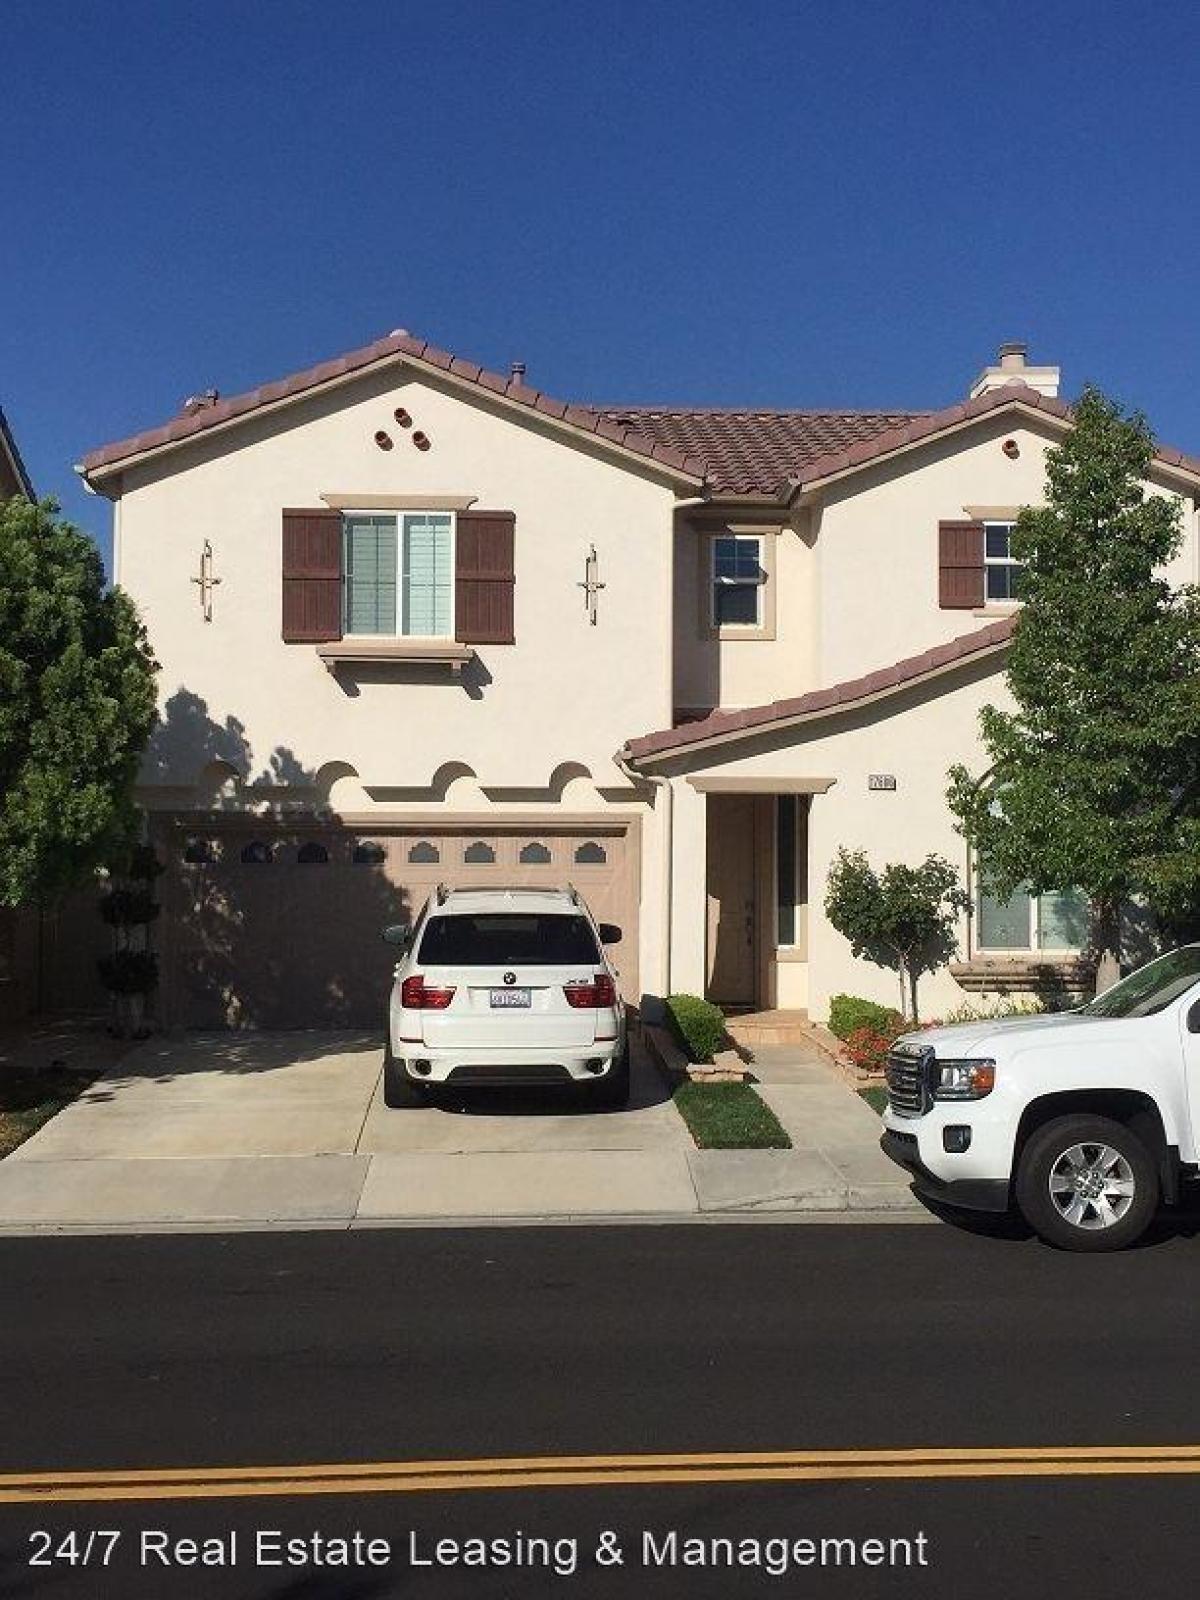 Picture of Home For Rent in Santa Clarita, California, United States